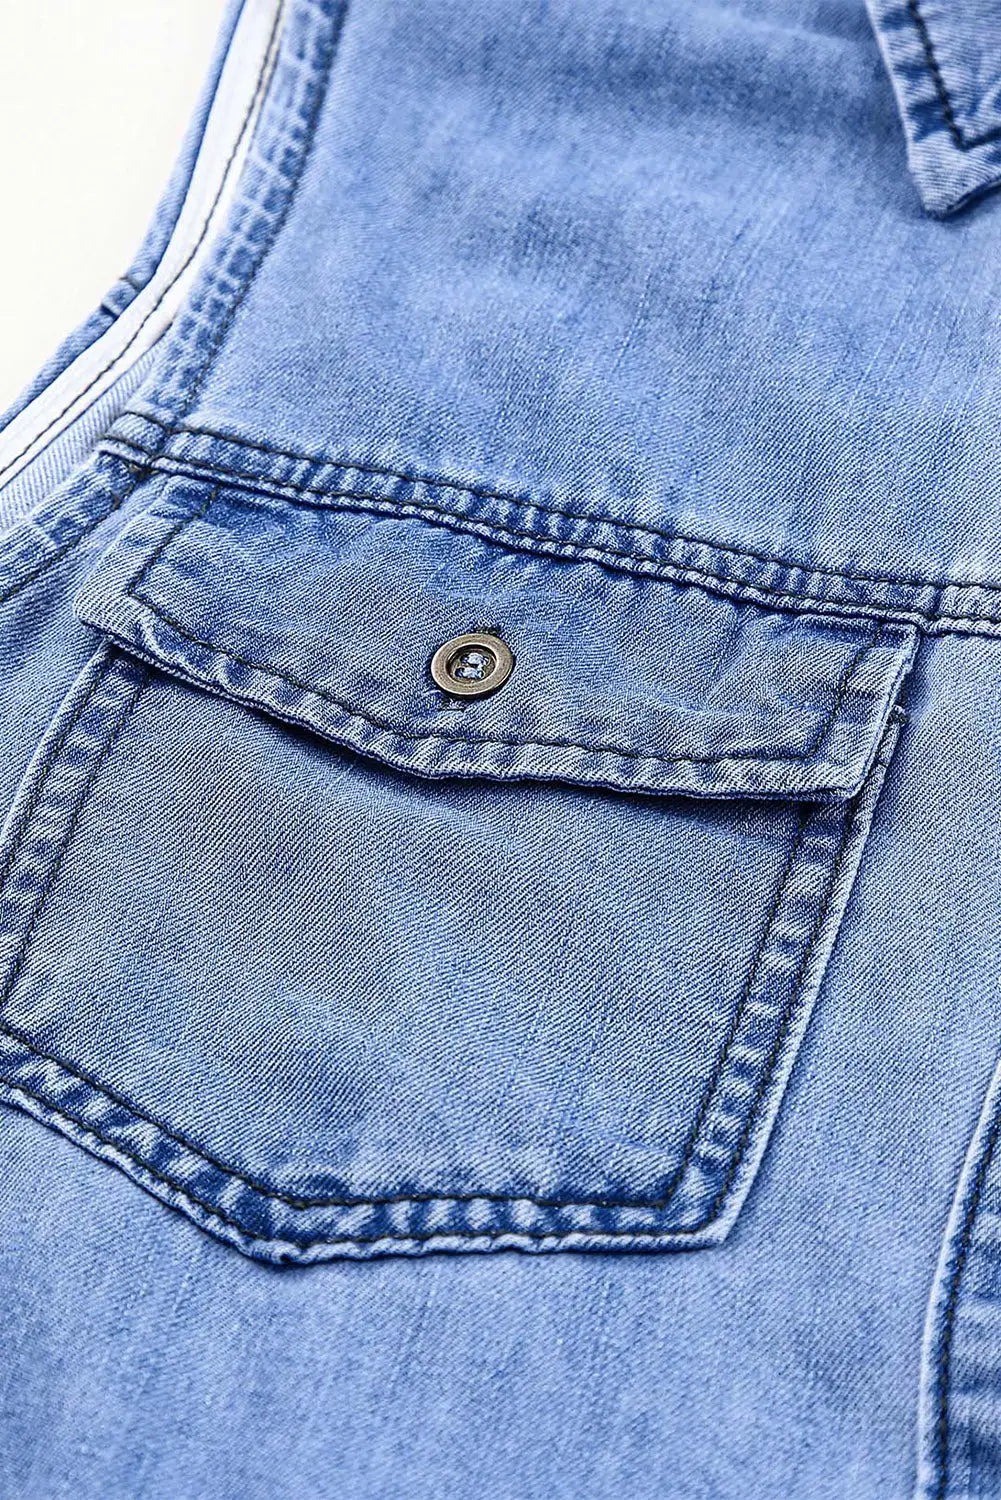 Sky blue flap pockets button up sleeveless denim dress - xl / 85% cotton + 15% polyester - mini dresses